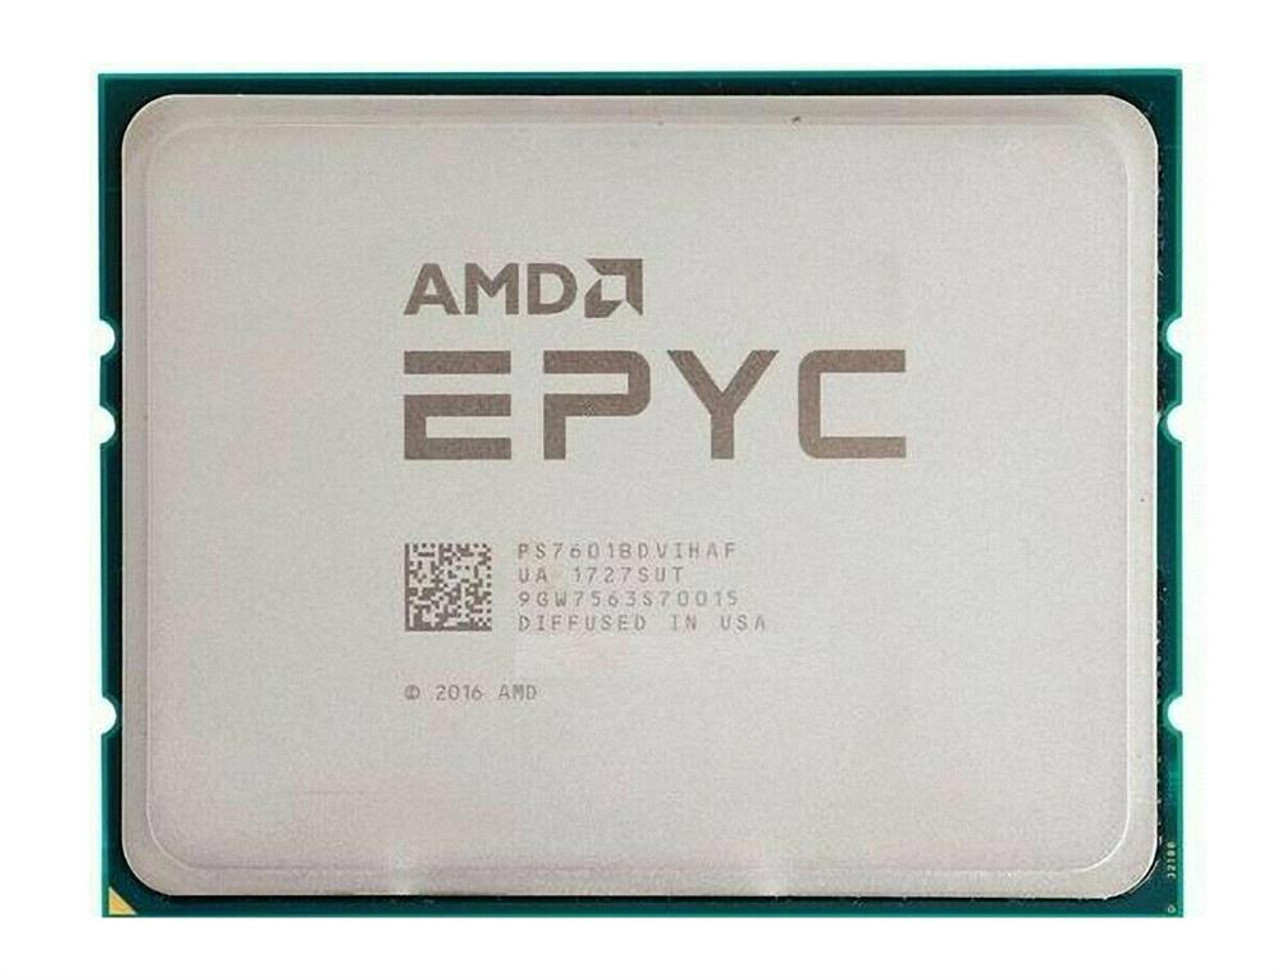 HPE DL385 Gen10 7301 AMD Processor Upgrade